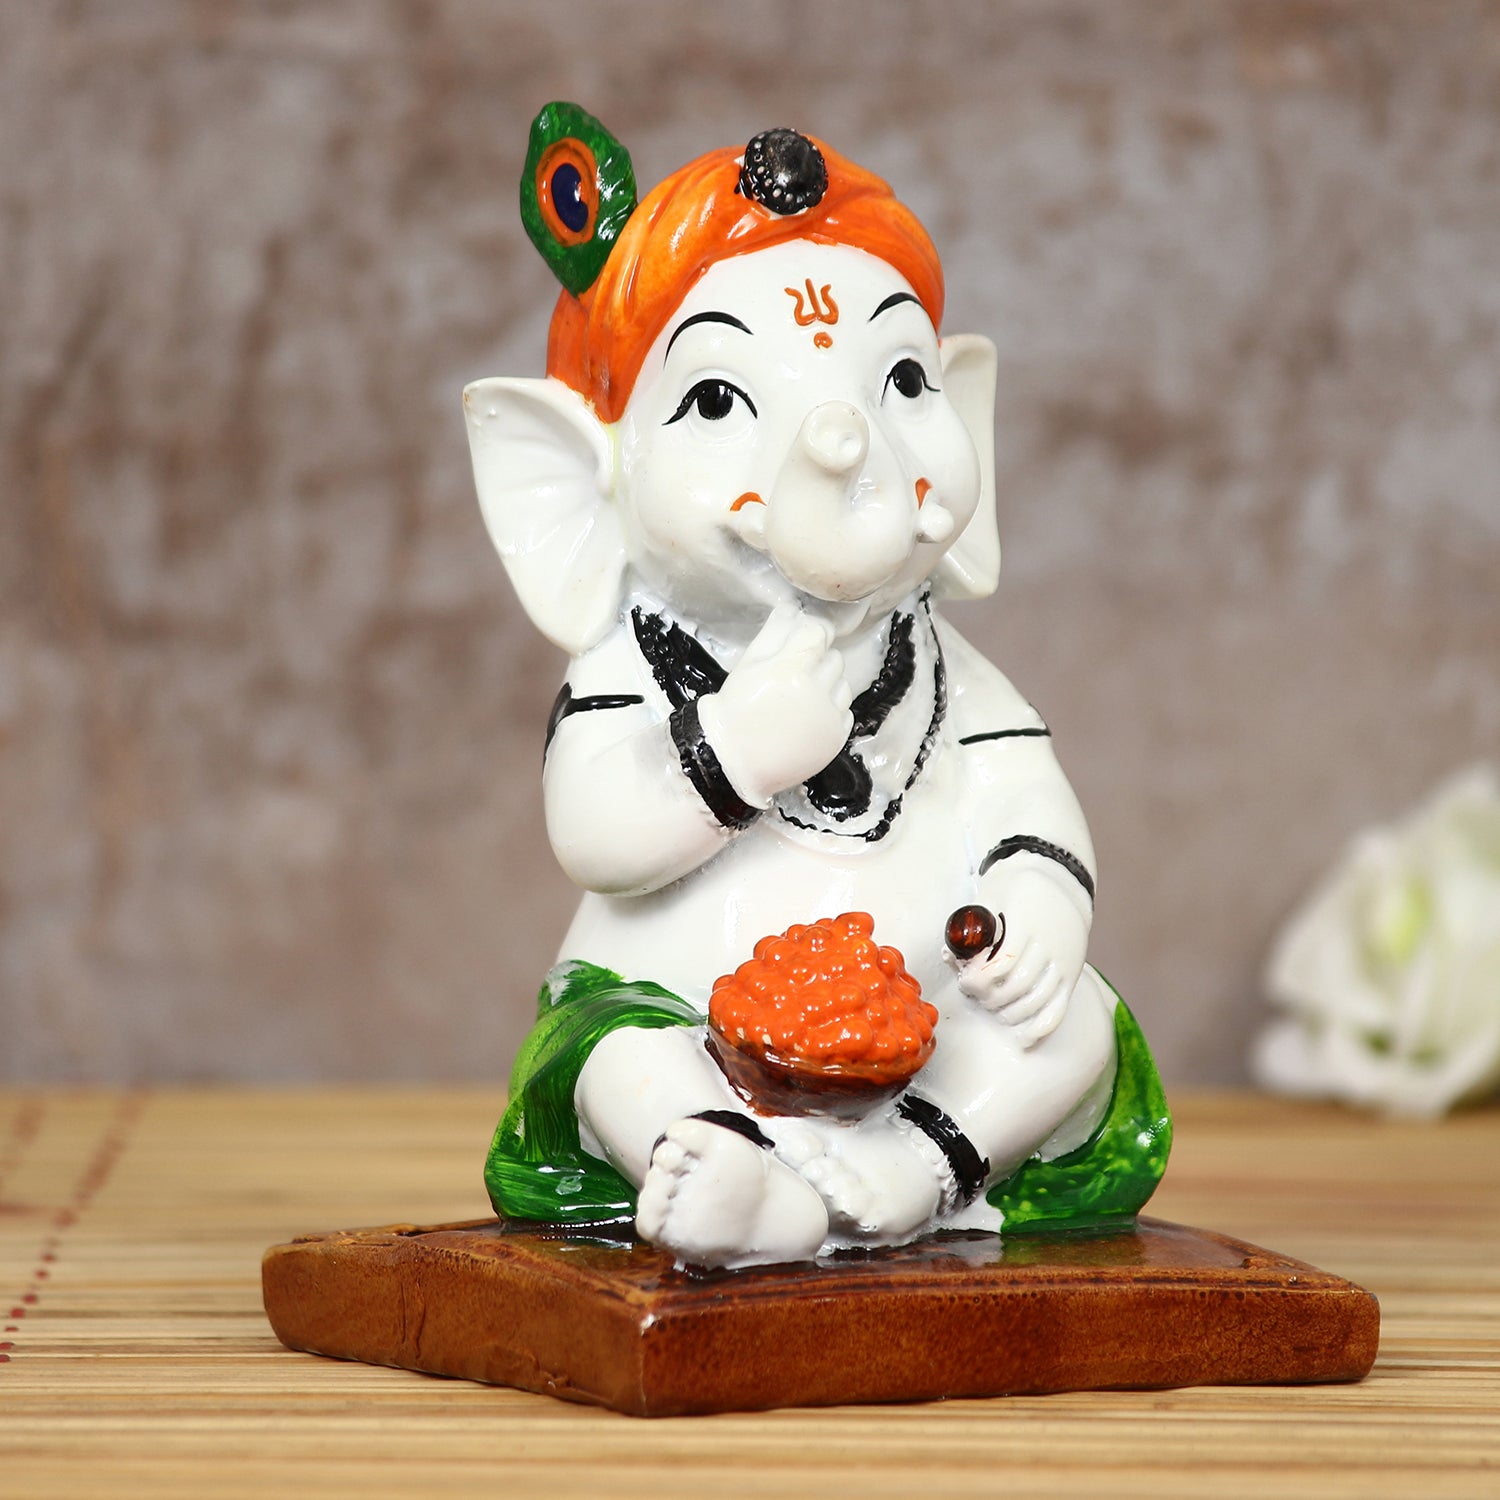 Decorative Polyresin Lord Ganesha Idol eating Ladoo in Lord Krishna Avatar (White, Orange, Green)